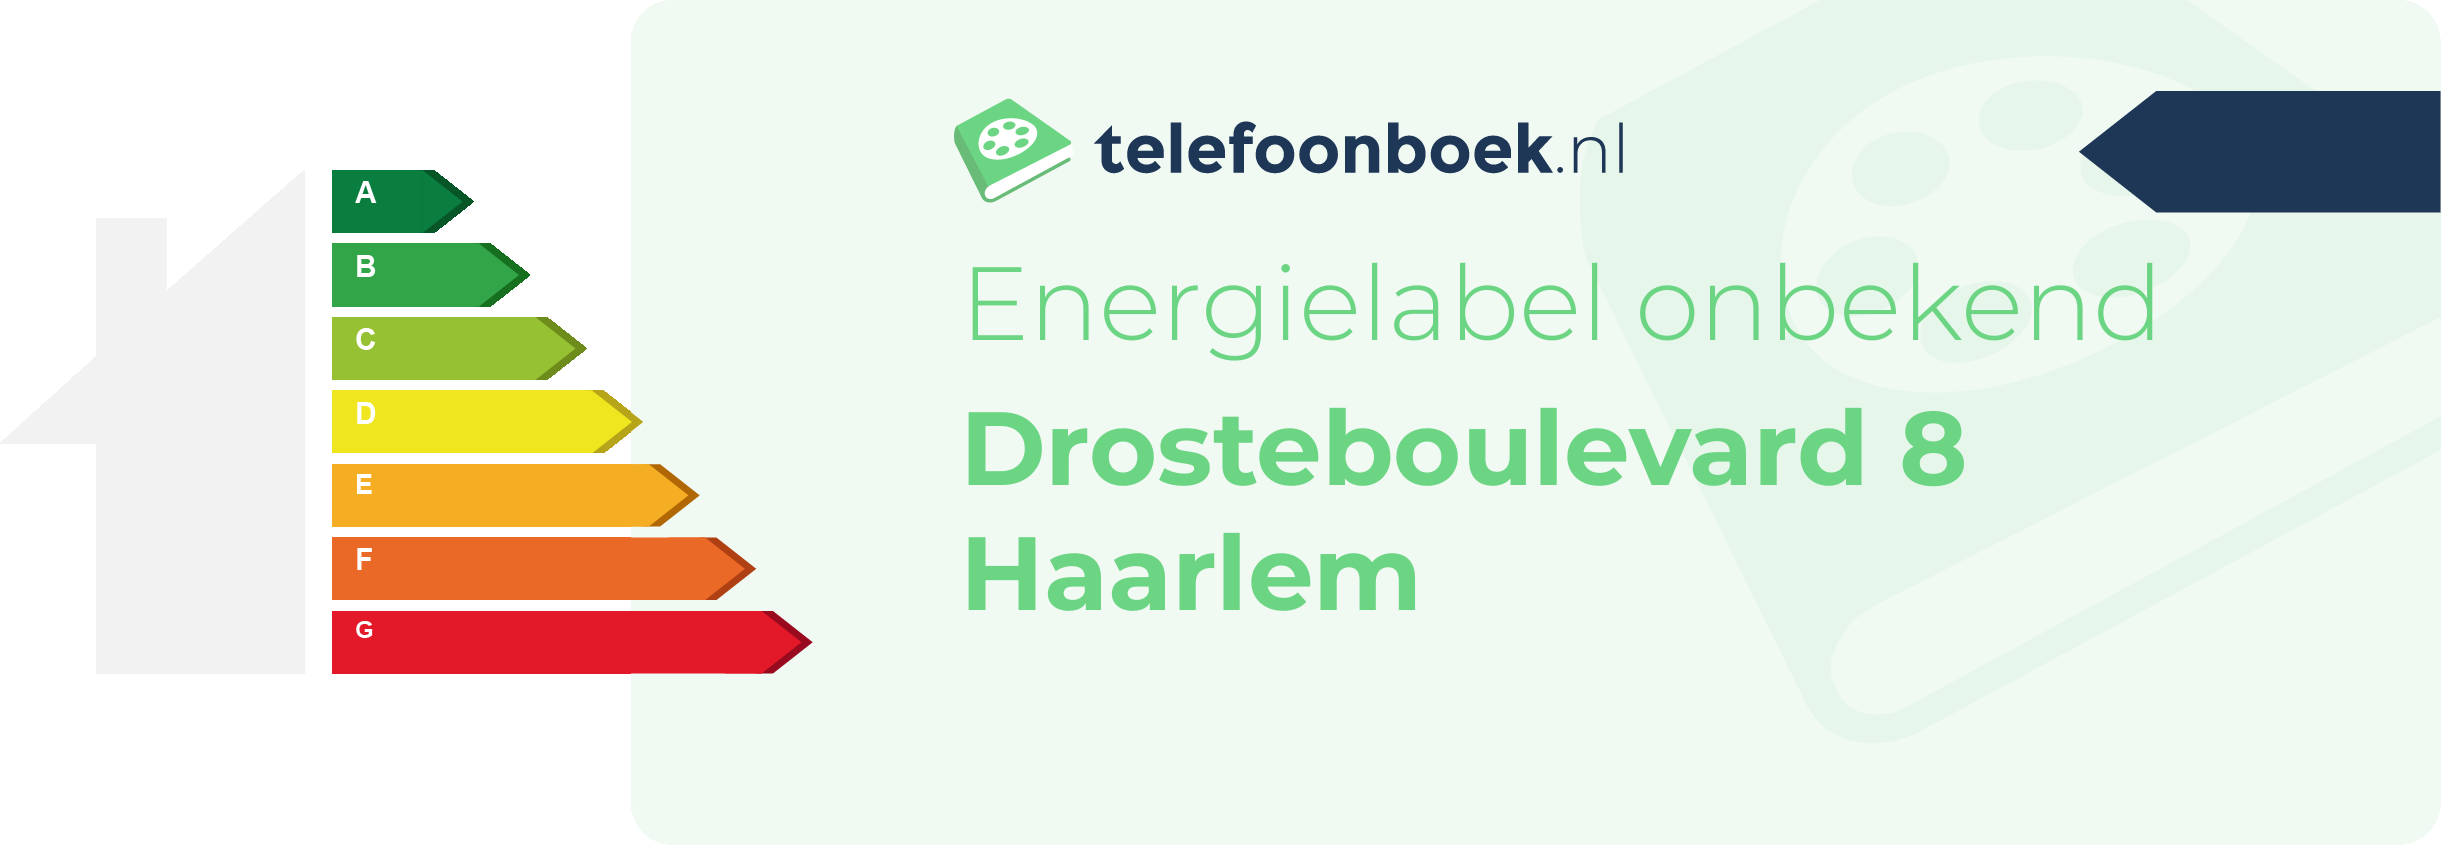 Energielabel Drosteboulevard 8 Haarlem